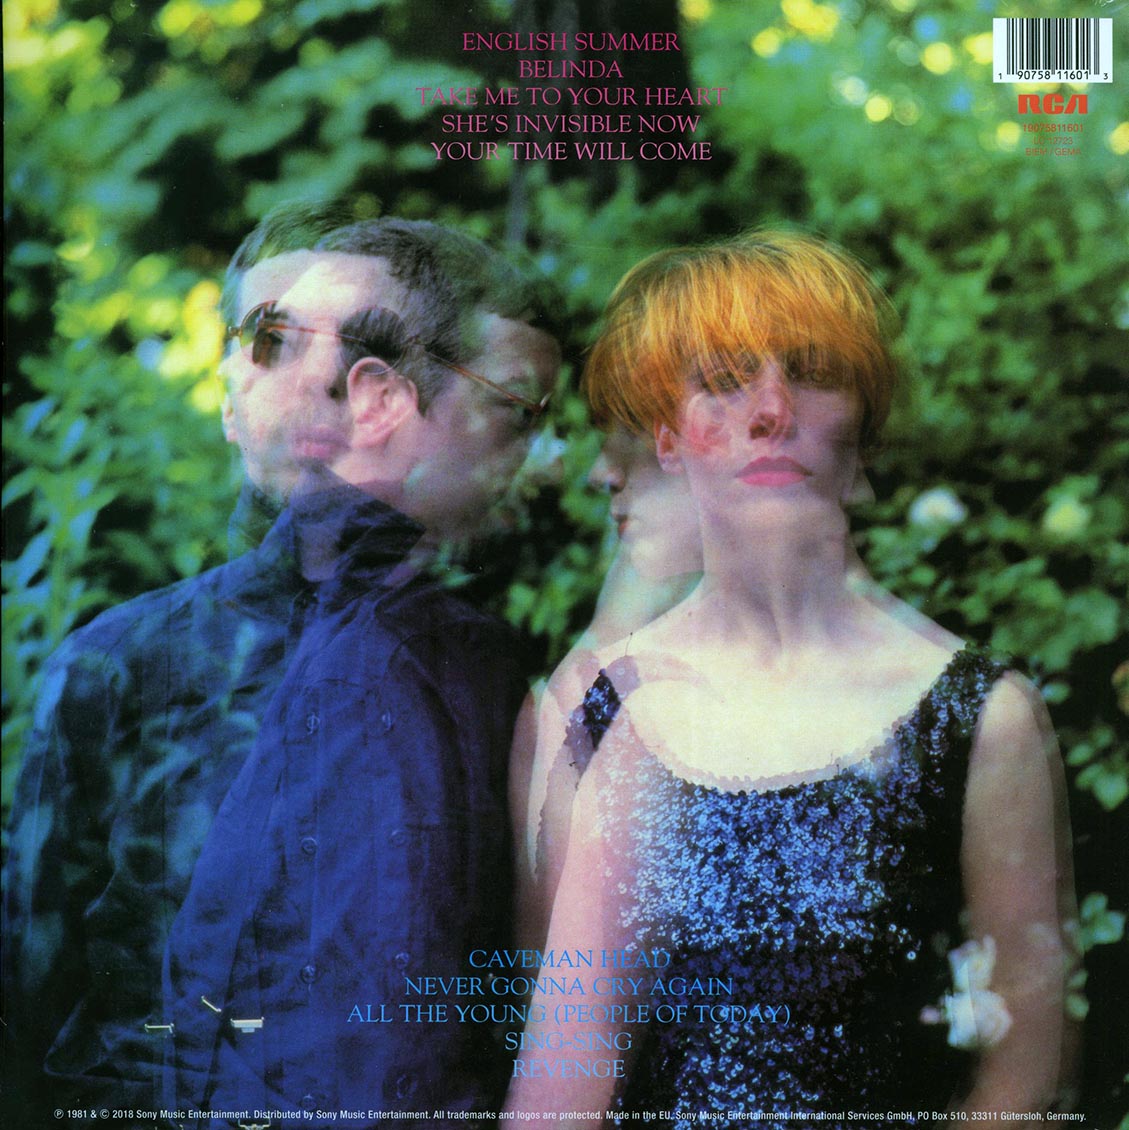 Eurythmics - In The Garden (incl. wav) (incl. mp3) (180g) (remastered) - Vinyl LP, LP